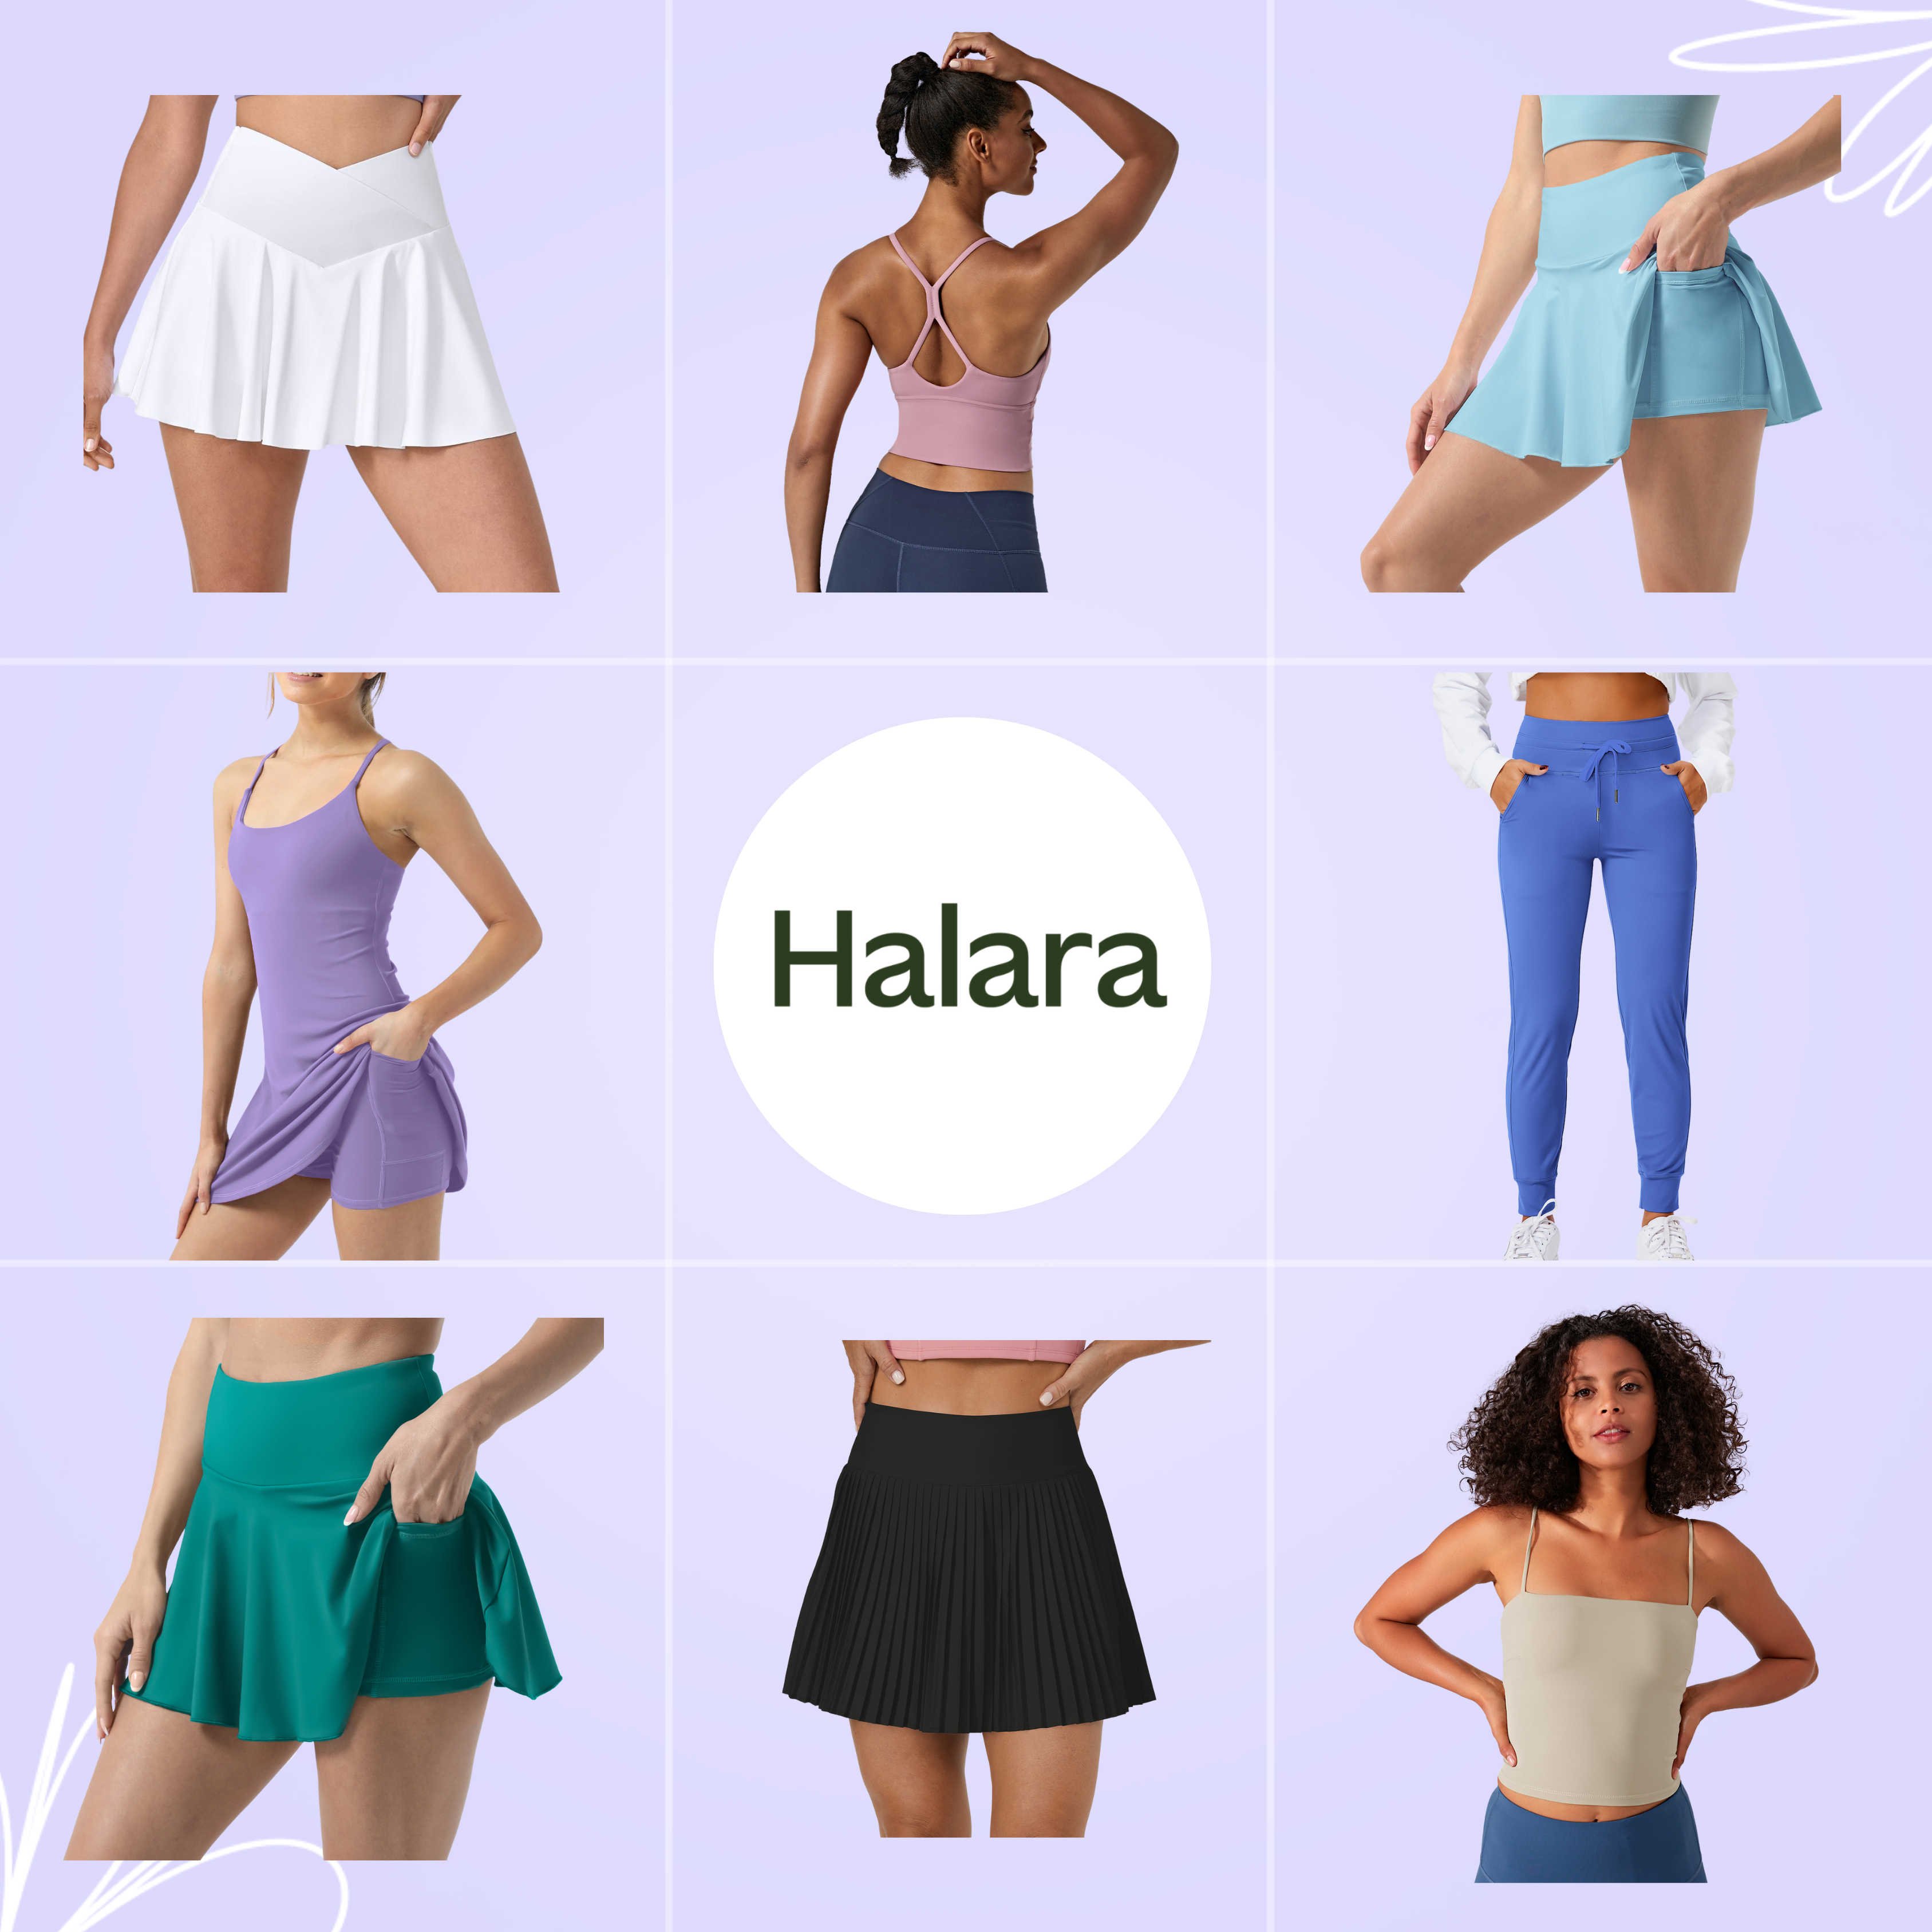 Brand image for Halara